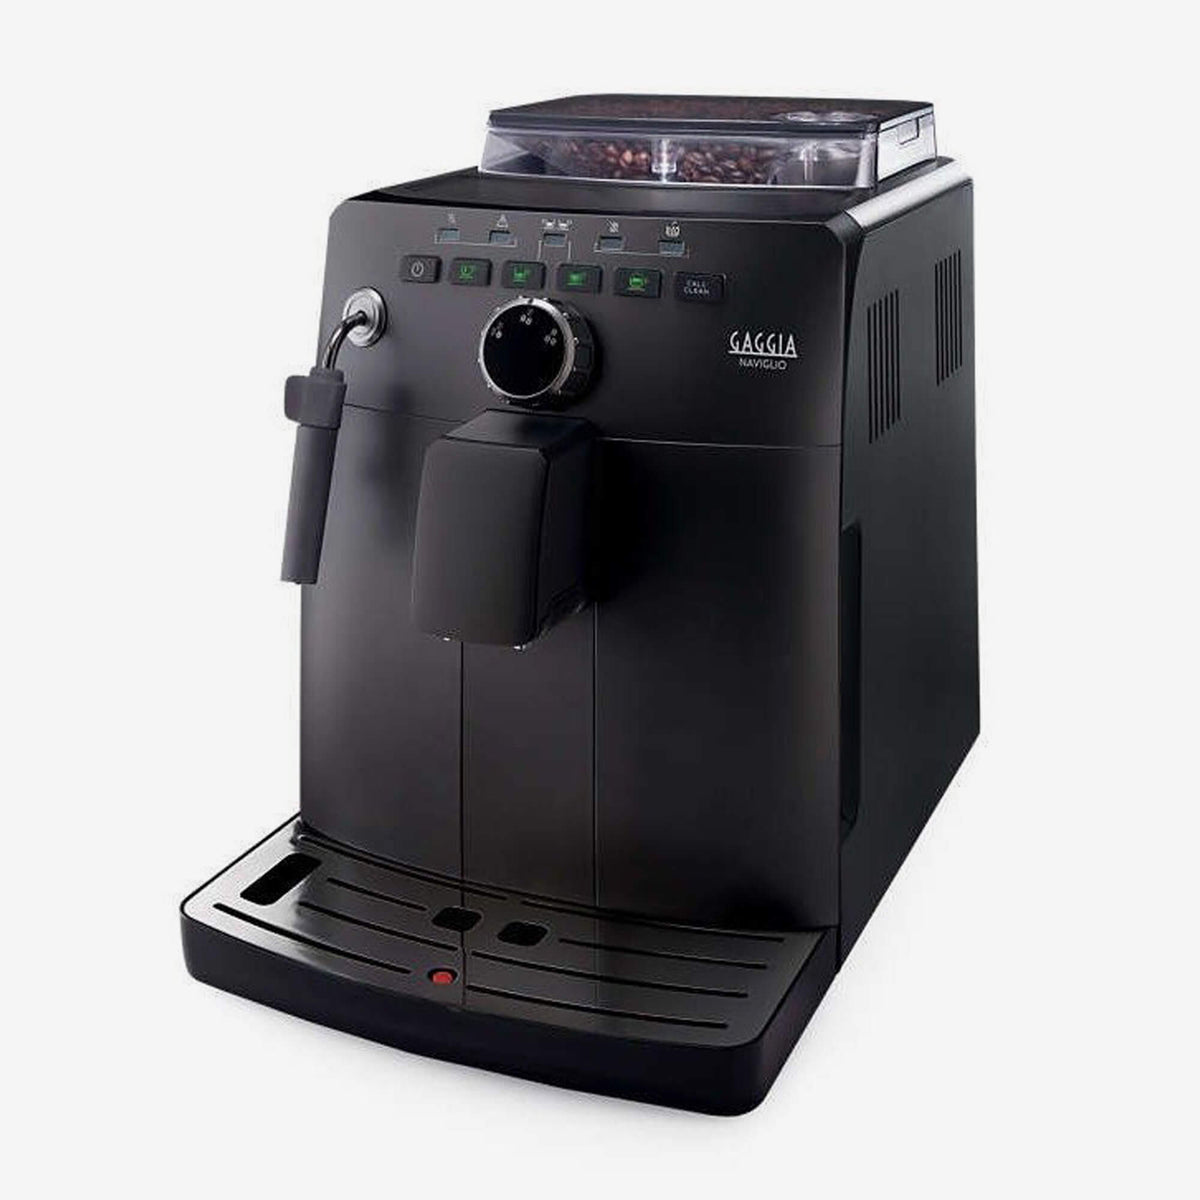 Naviglio Bean to Cup Coffee Machine